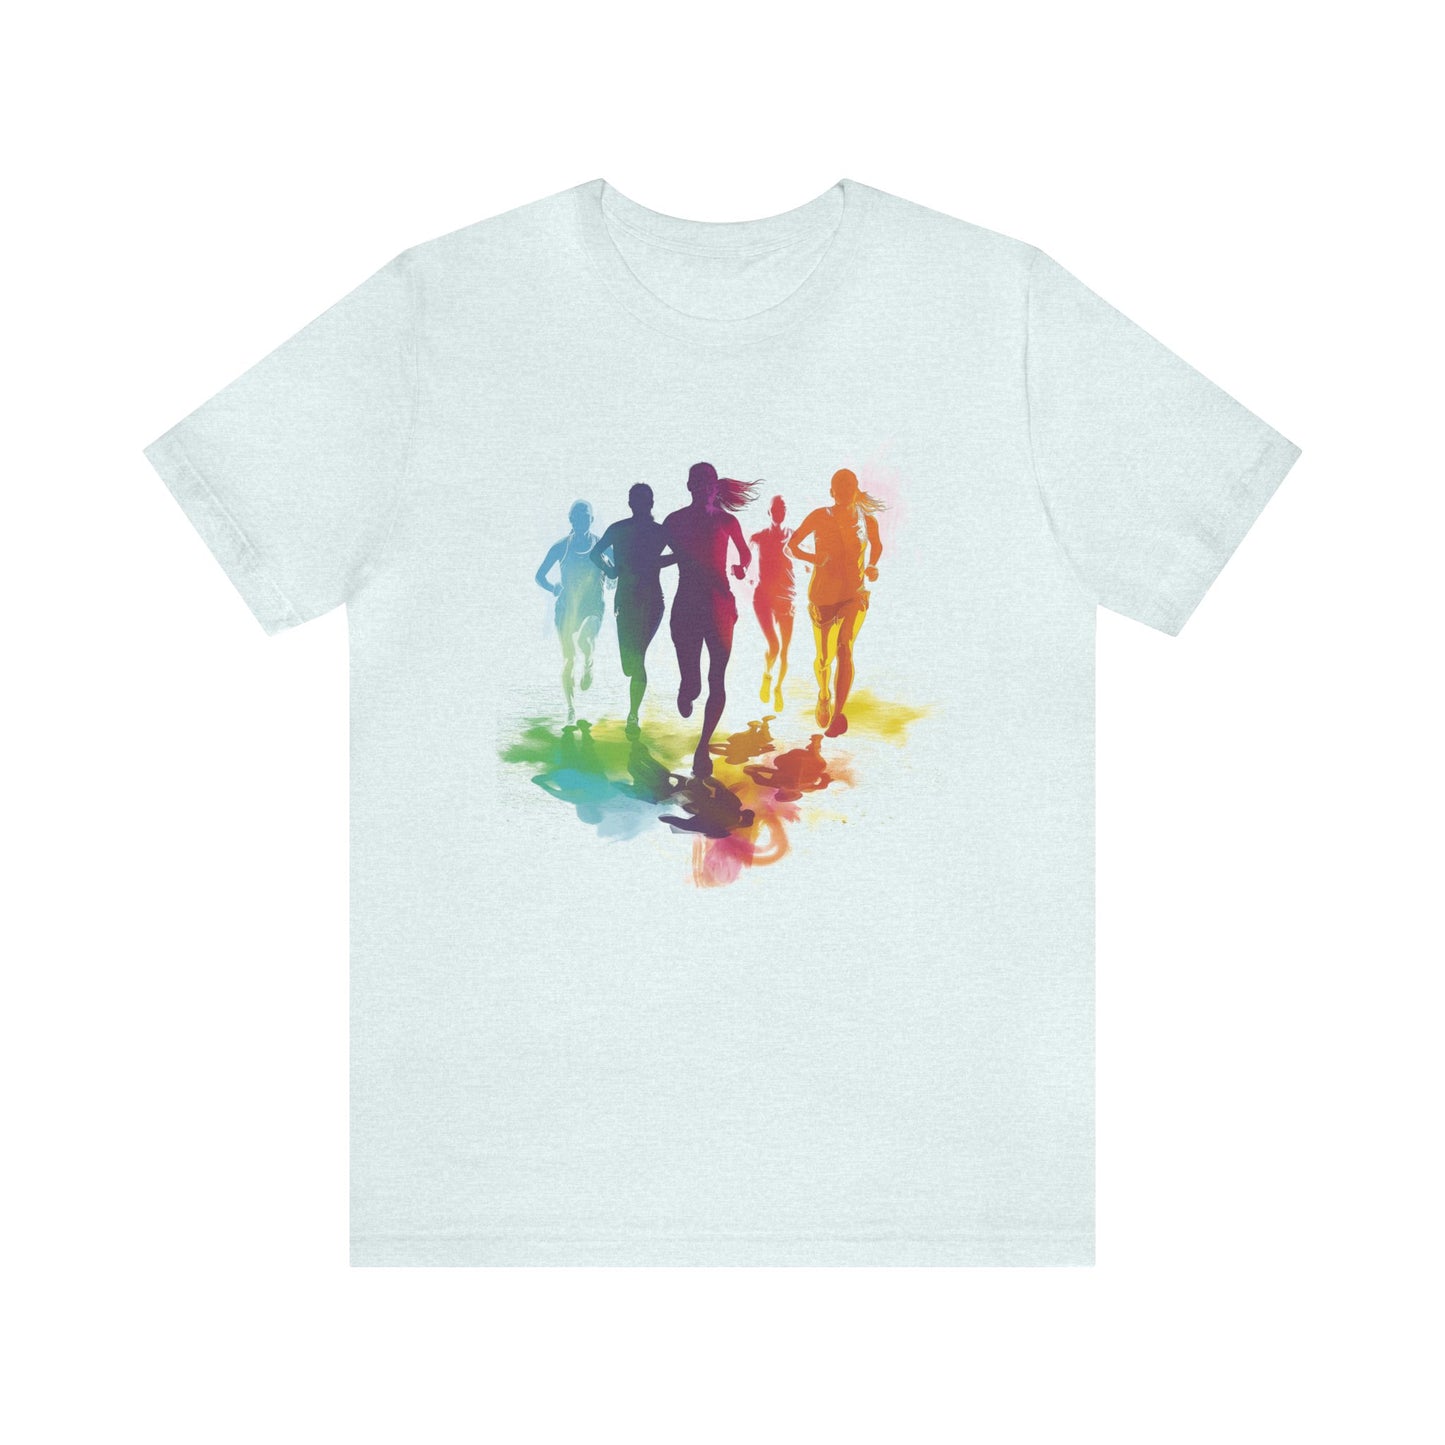 LGBTQ Runner Shirt Marathon Running Tshirt Half Marathon Tee Rainbow Color Running Shirt Gift for Runner Graphic Running T-Shirt Running Cloths